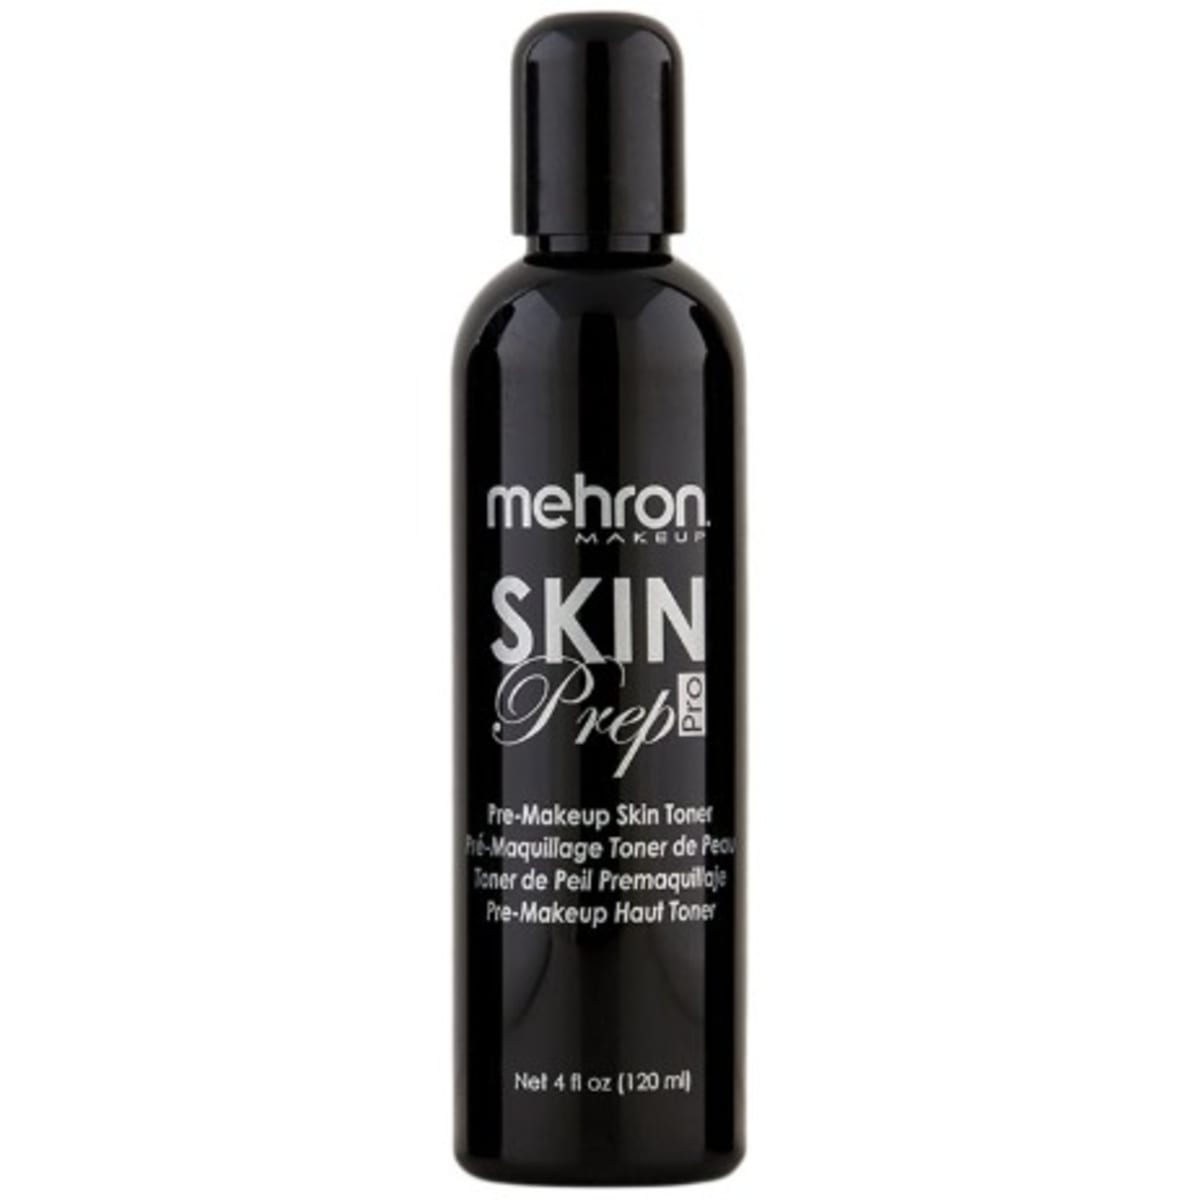 Skin Prep PRO Mehron toner 120ml -  - Obchod s